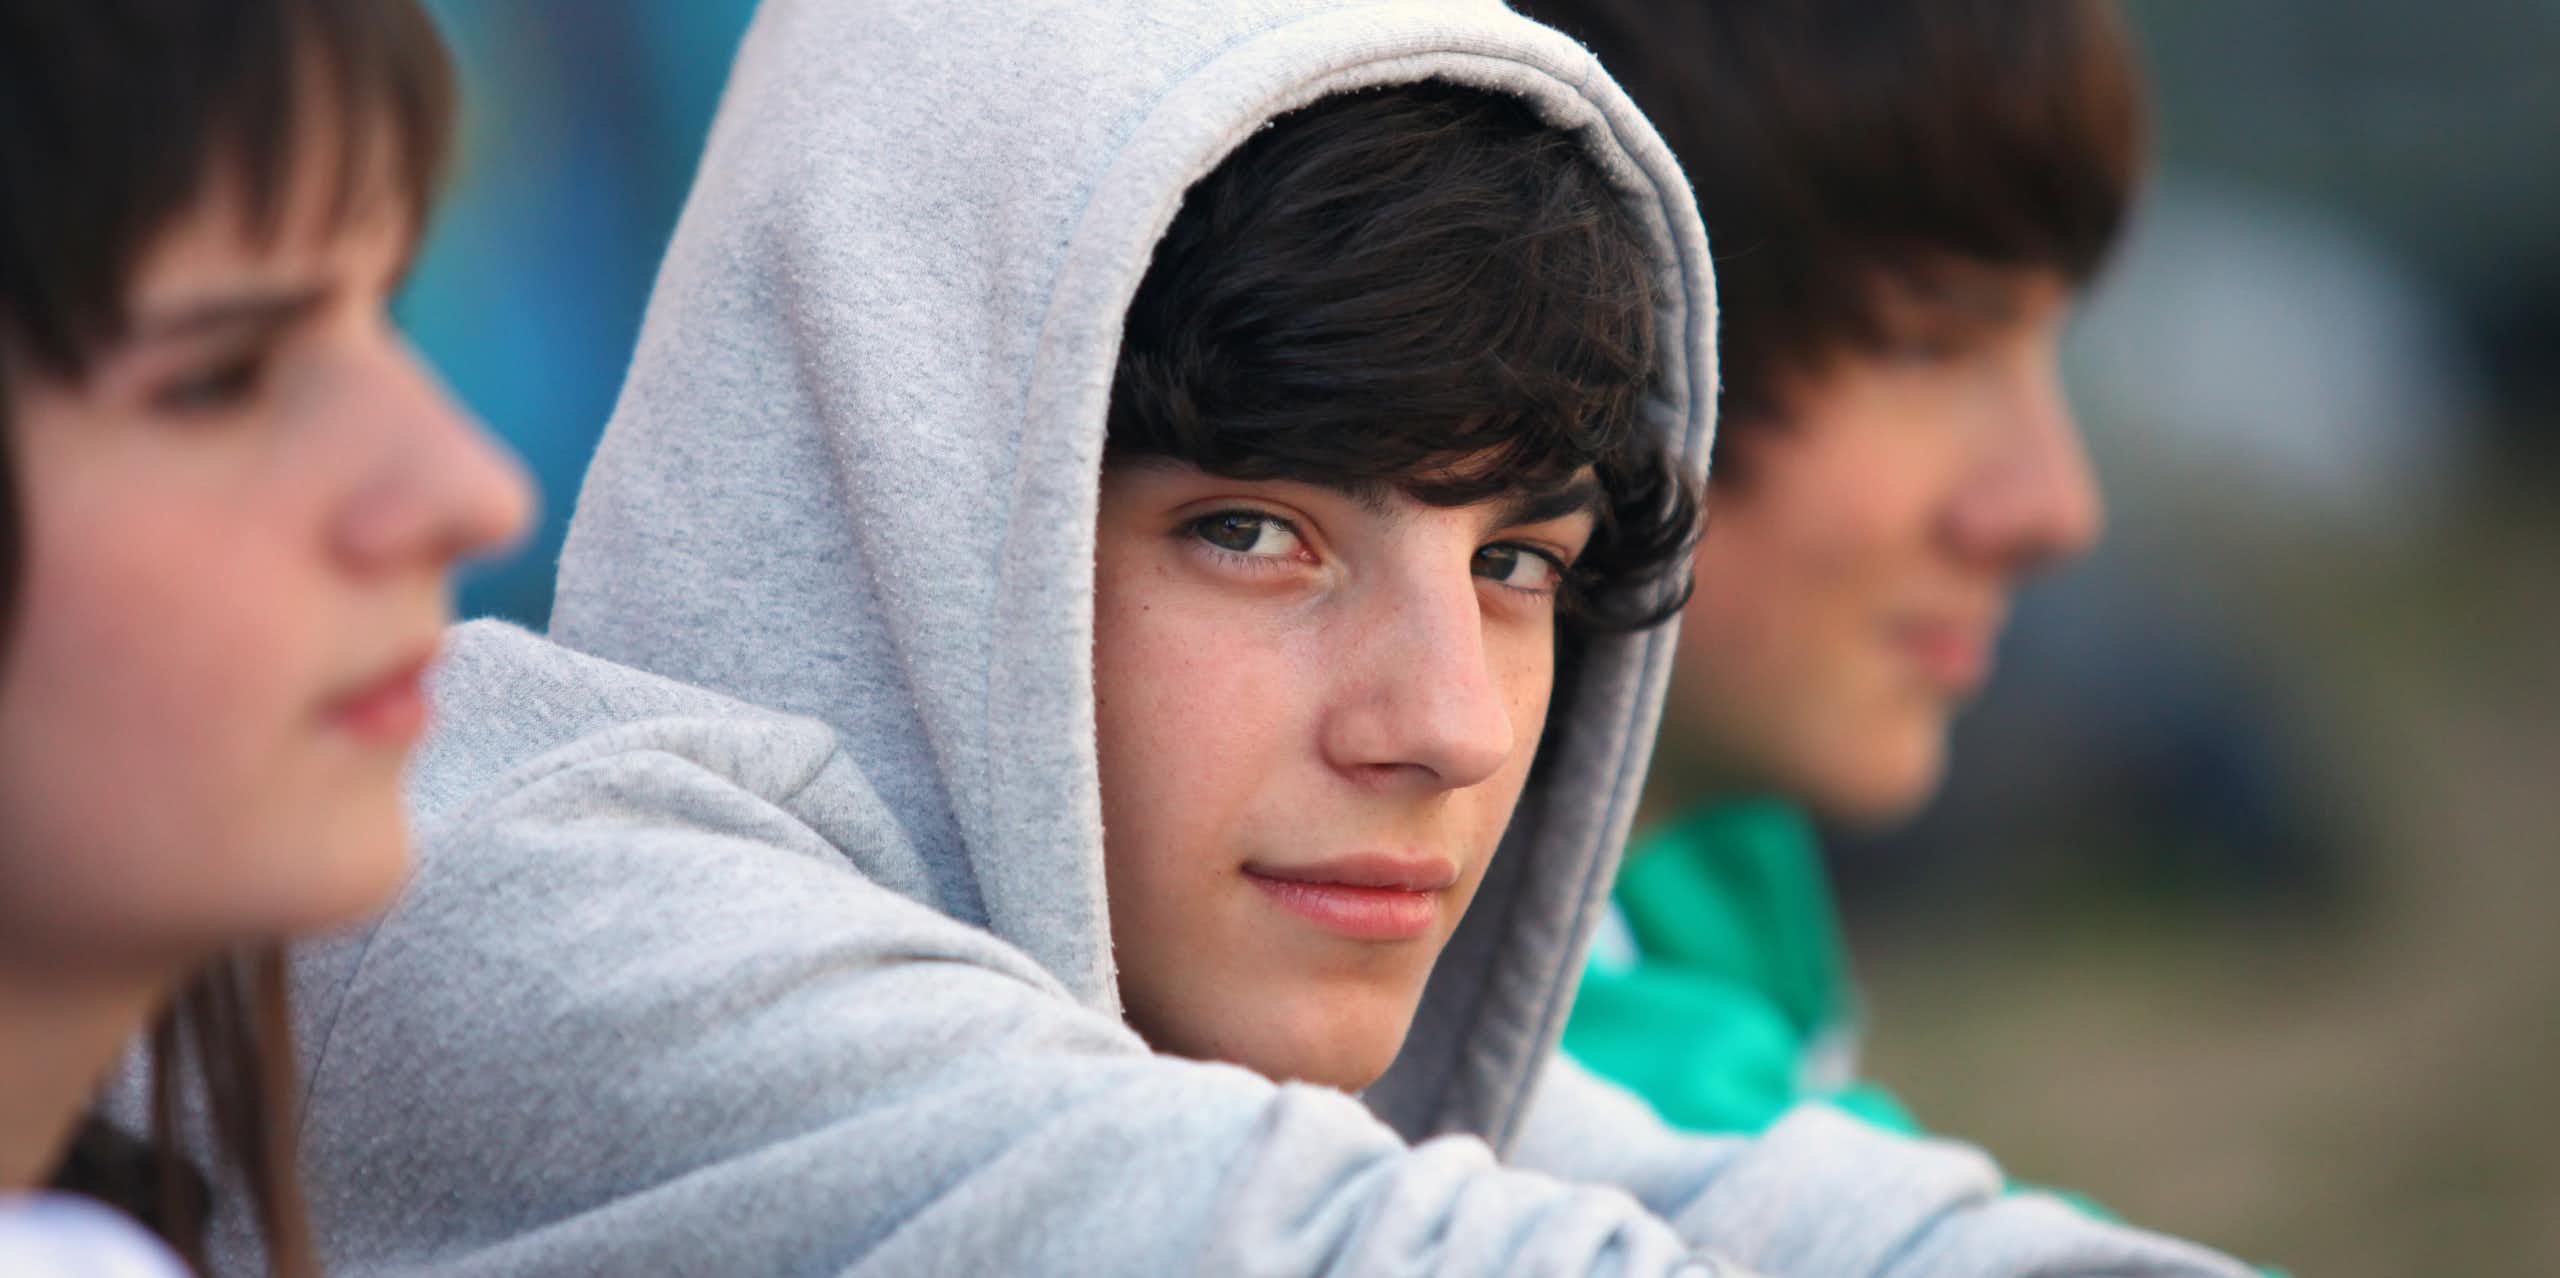 Teenagers, one teenage boy looking at camers